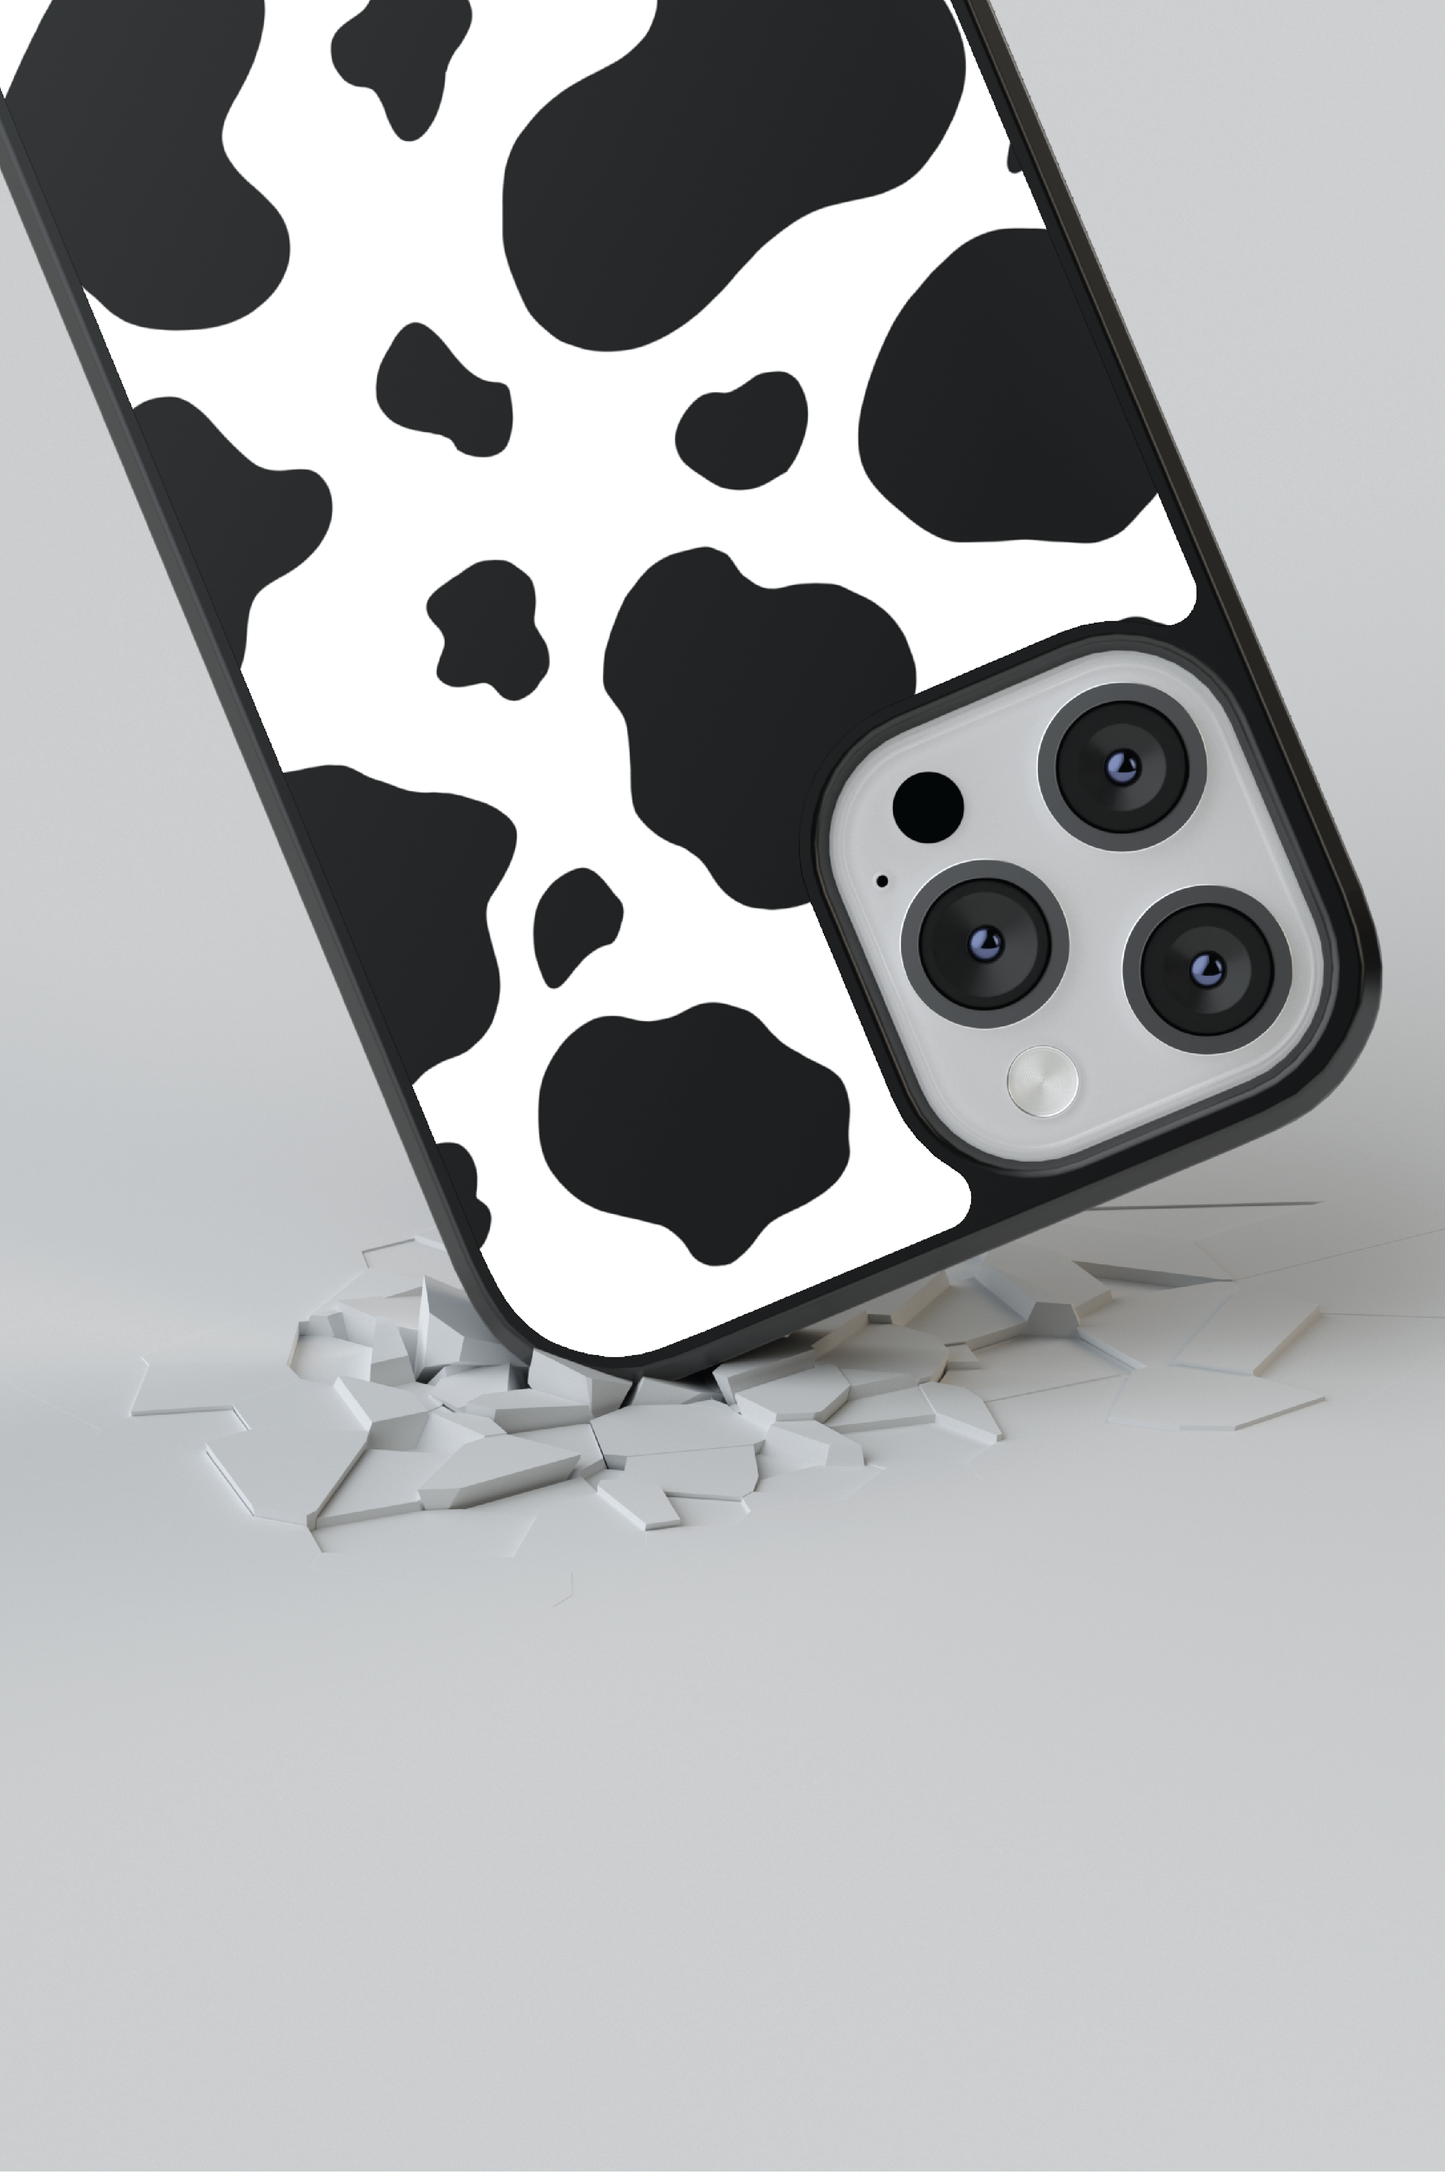 Cow Print